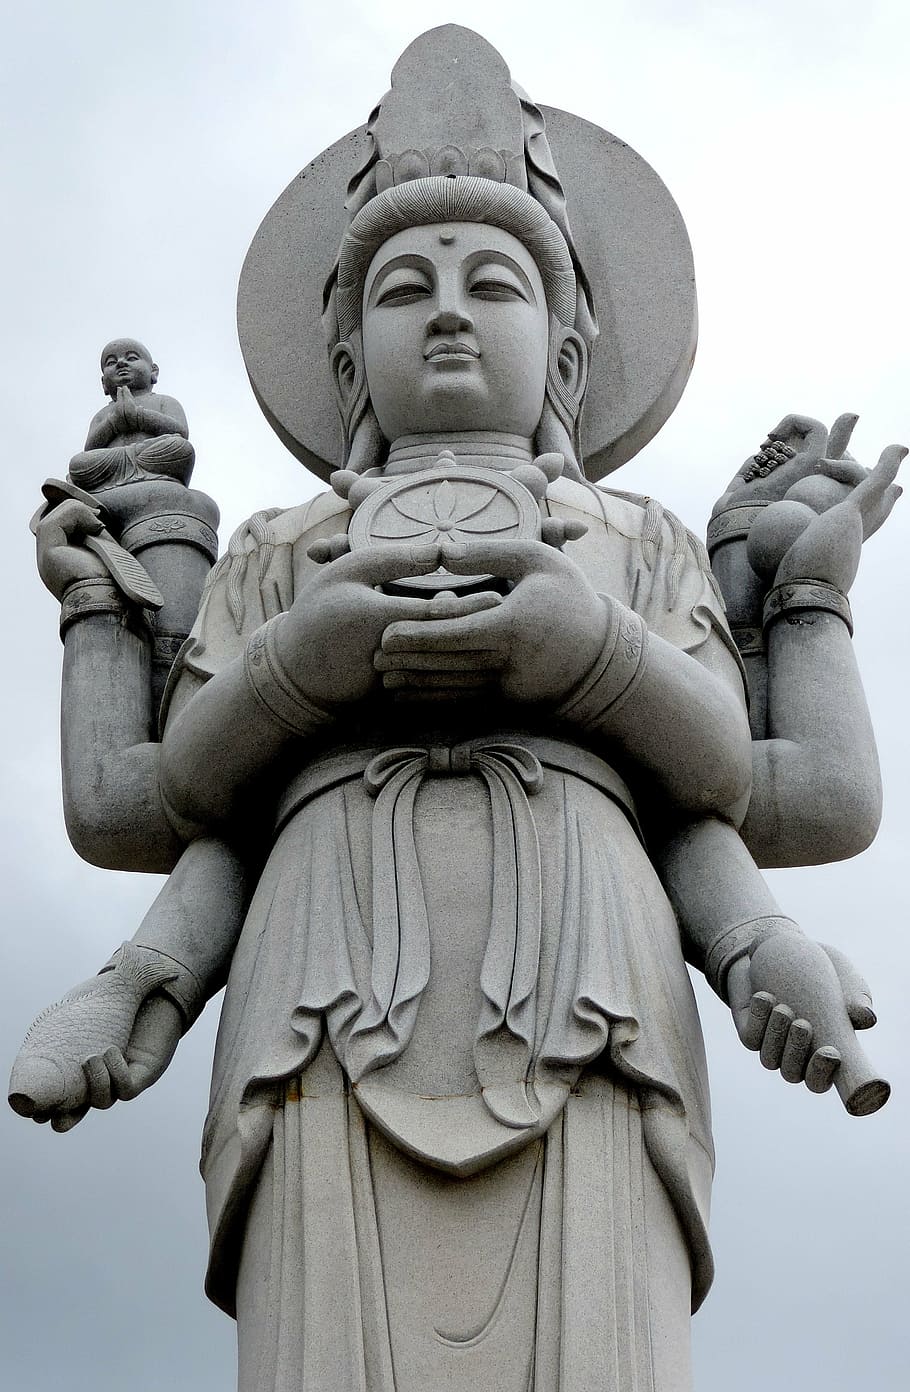 estatua de Buda, durante el día, diosa, india, religión, hinduismo, hindú, tradicional, religioso, tradición